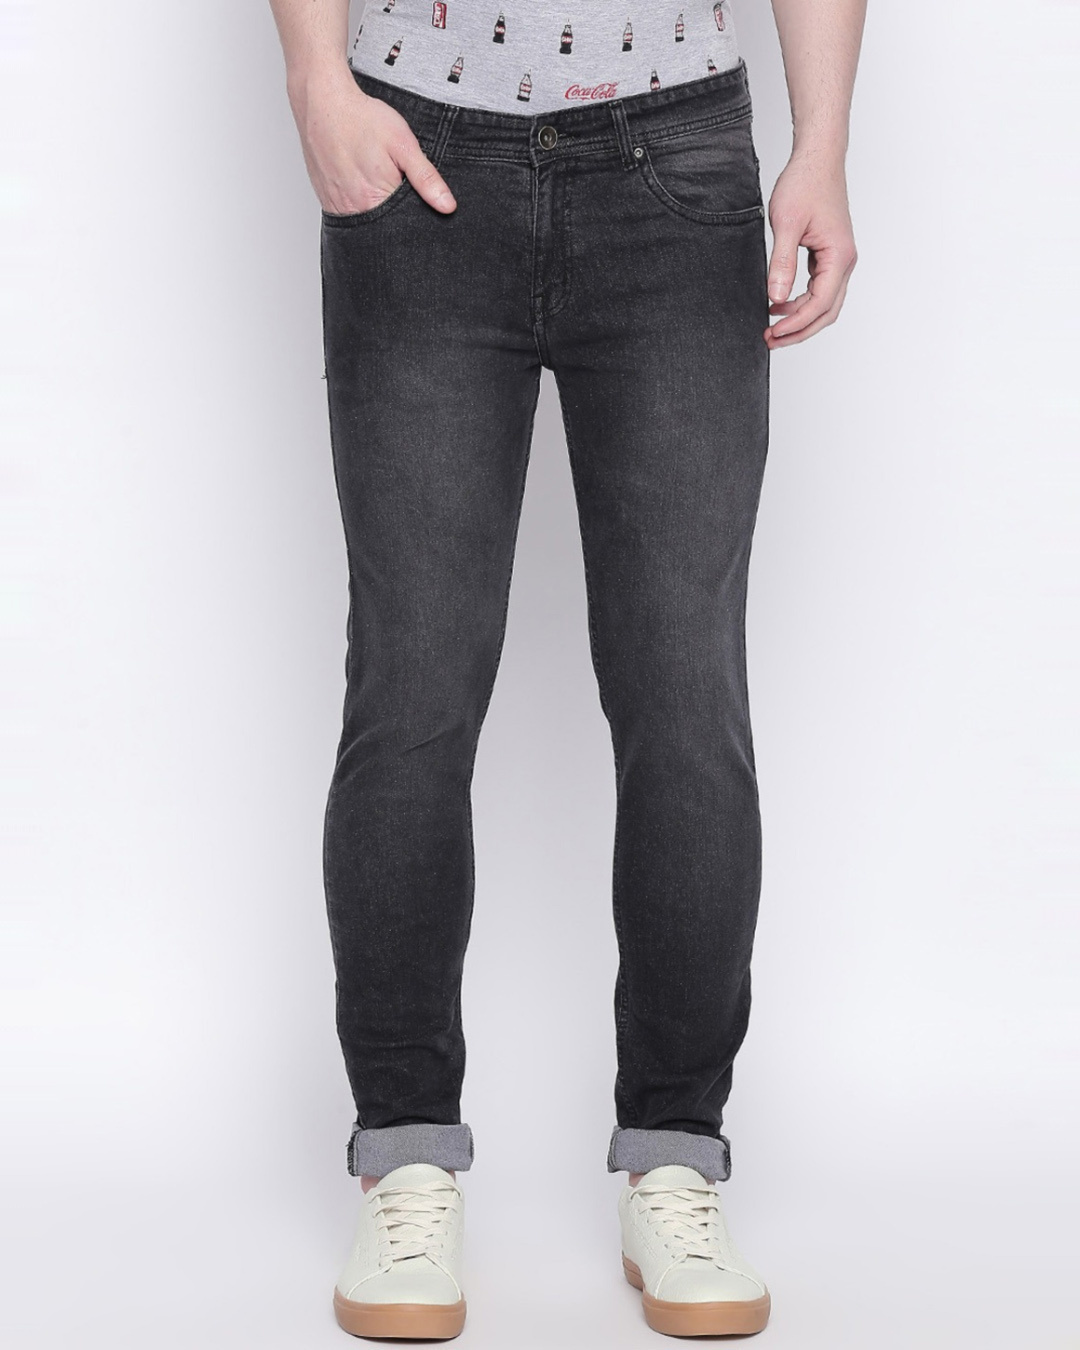 Buy Men's Grey Slim Fit Jeans Online at Bewakoof